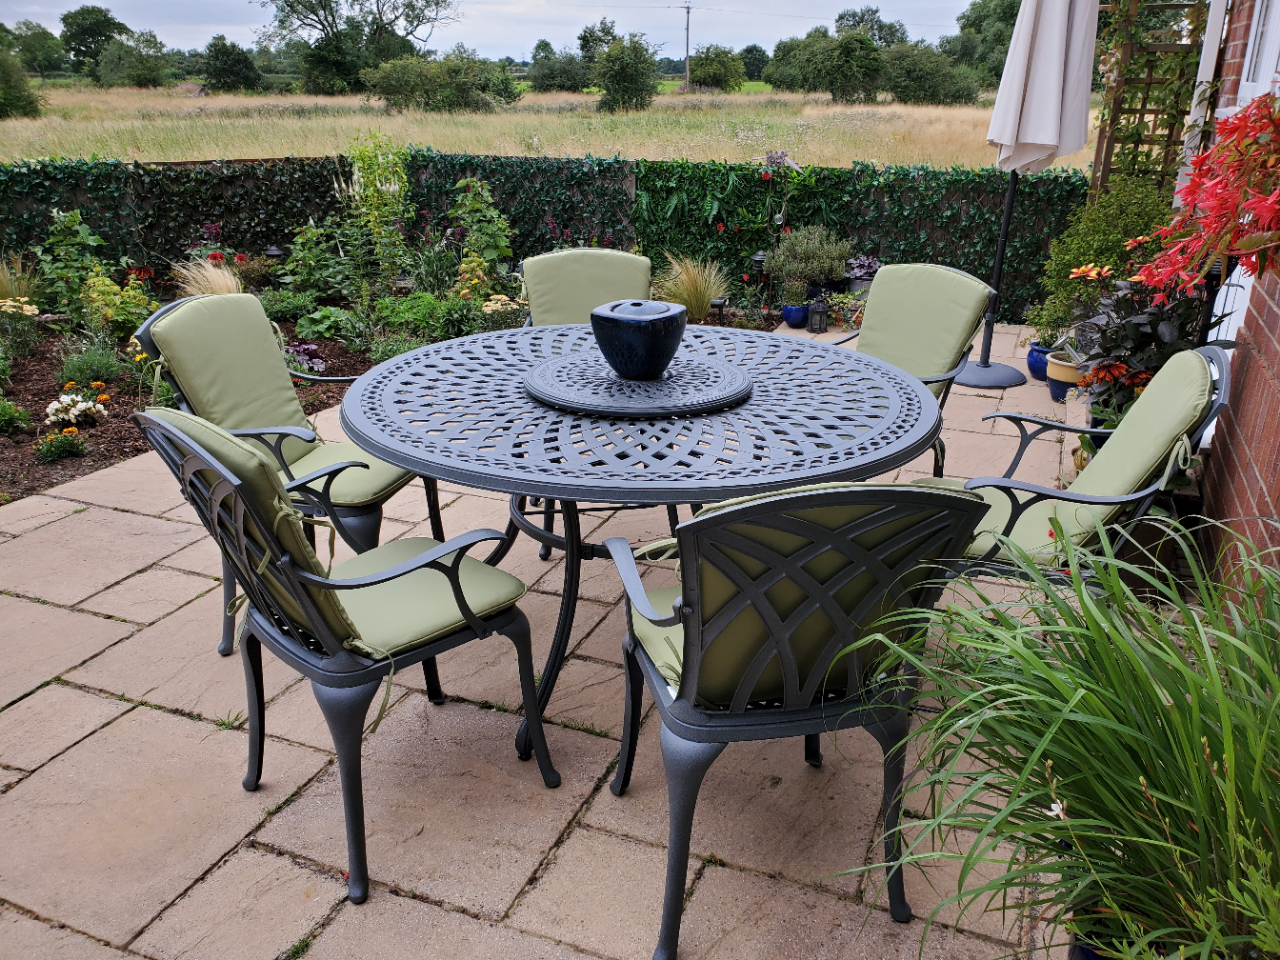 Create a table centrepiece for garden decor with a Lazy Susan Turntable